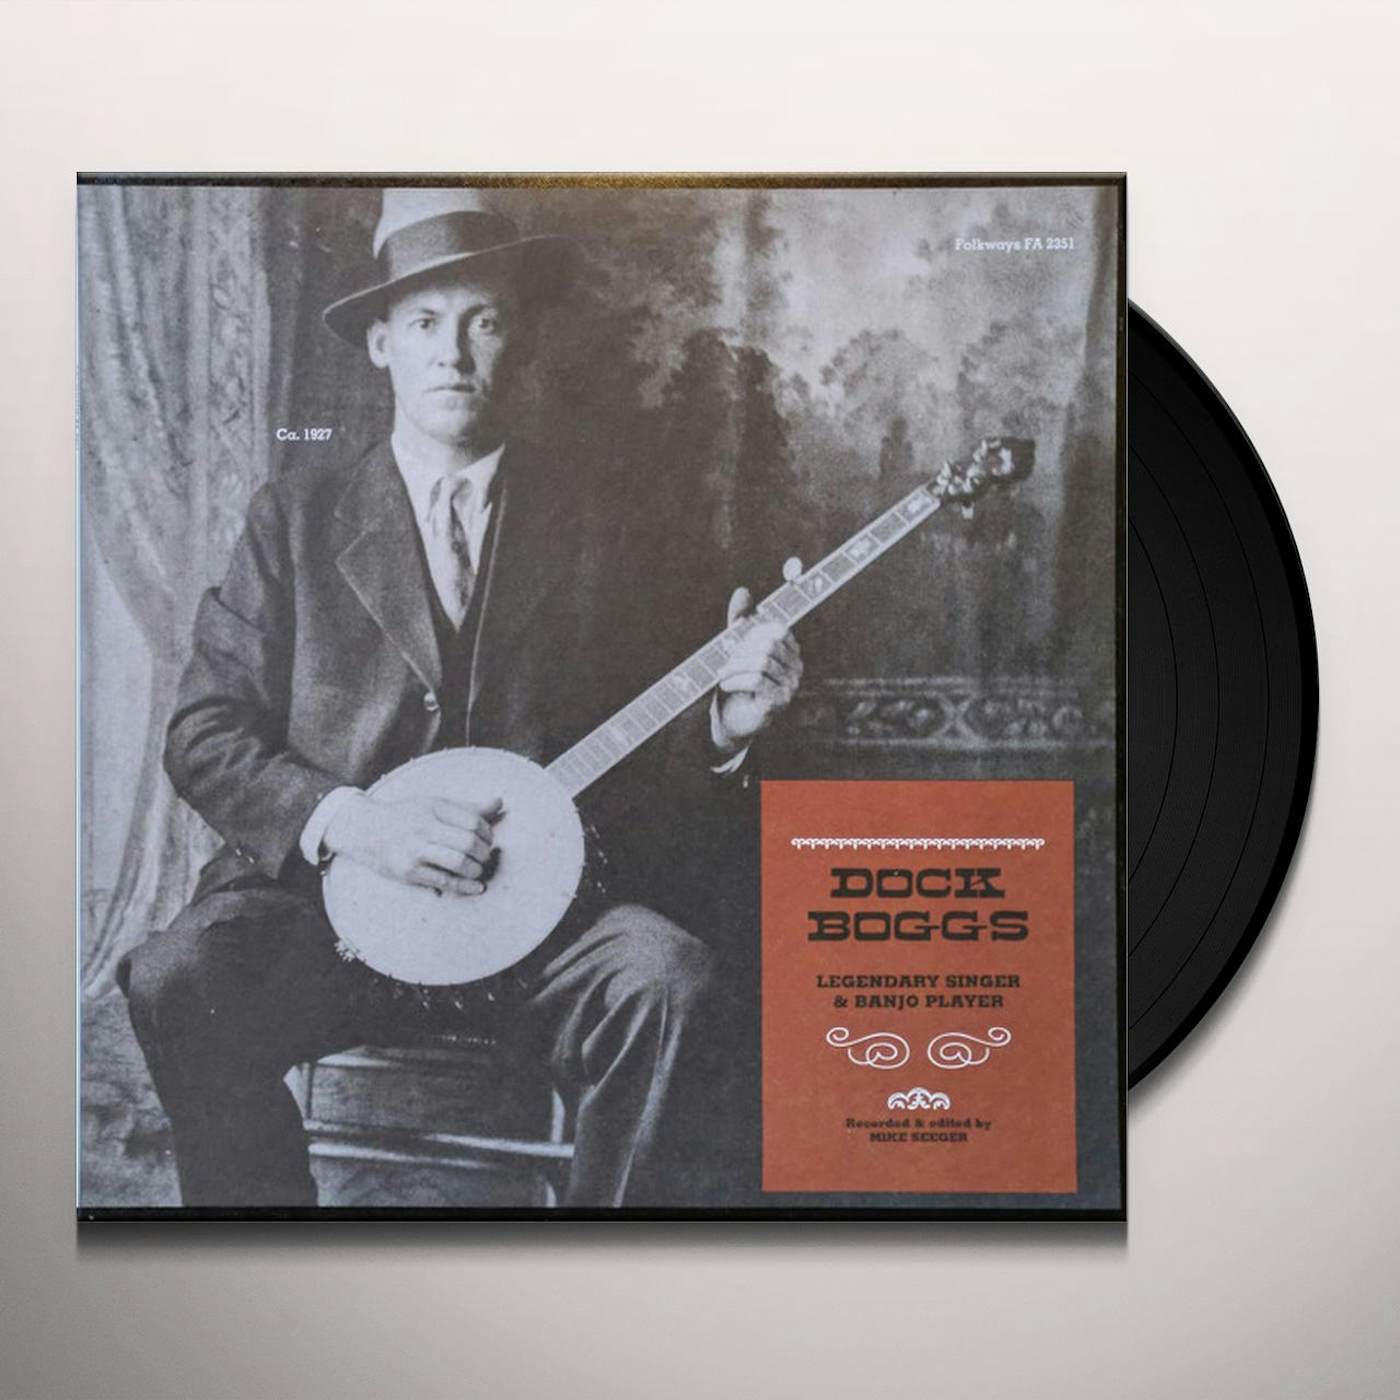 Dock Boggs: Legendary Singer and Banjo Player Vinyl Record